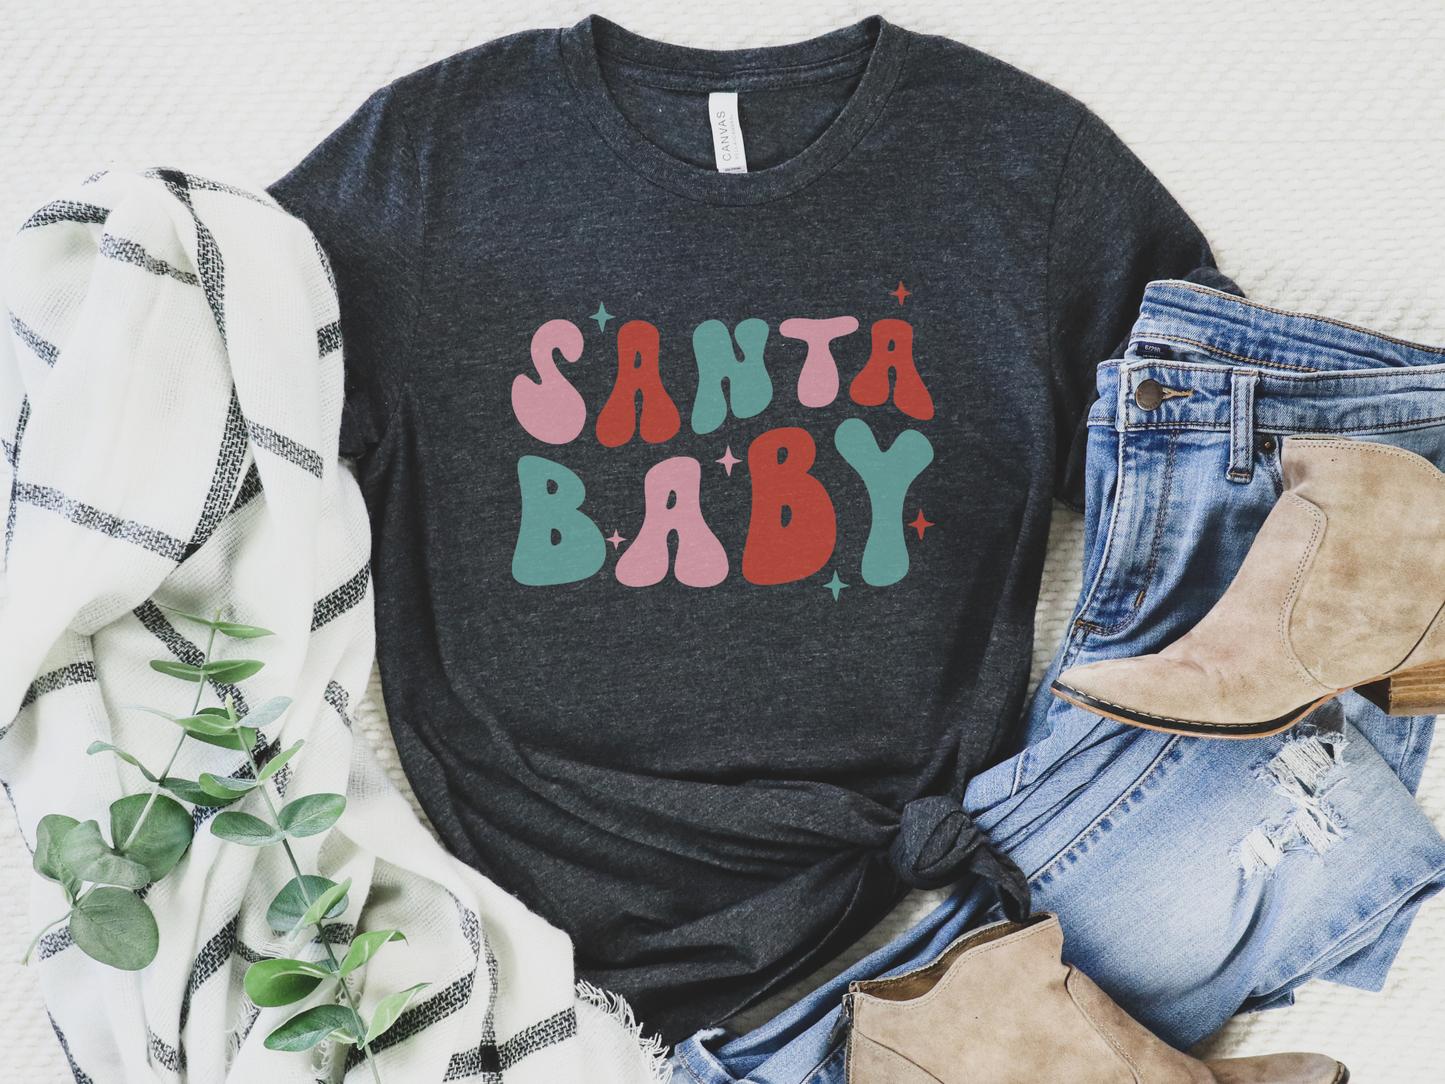 Santa Baby Shirt for Women